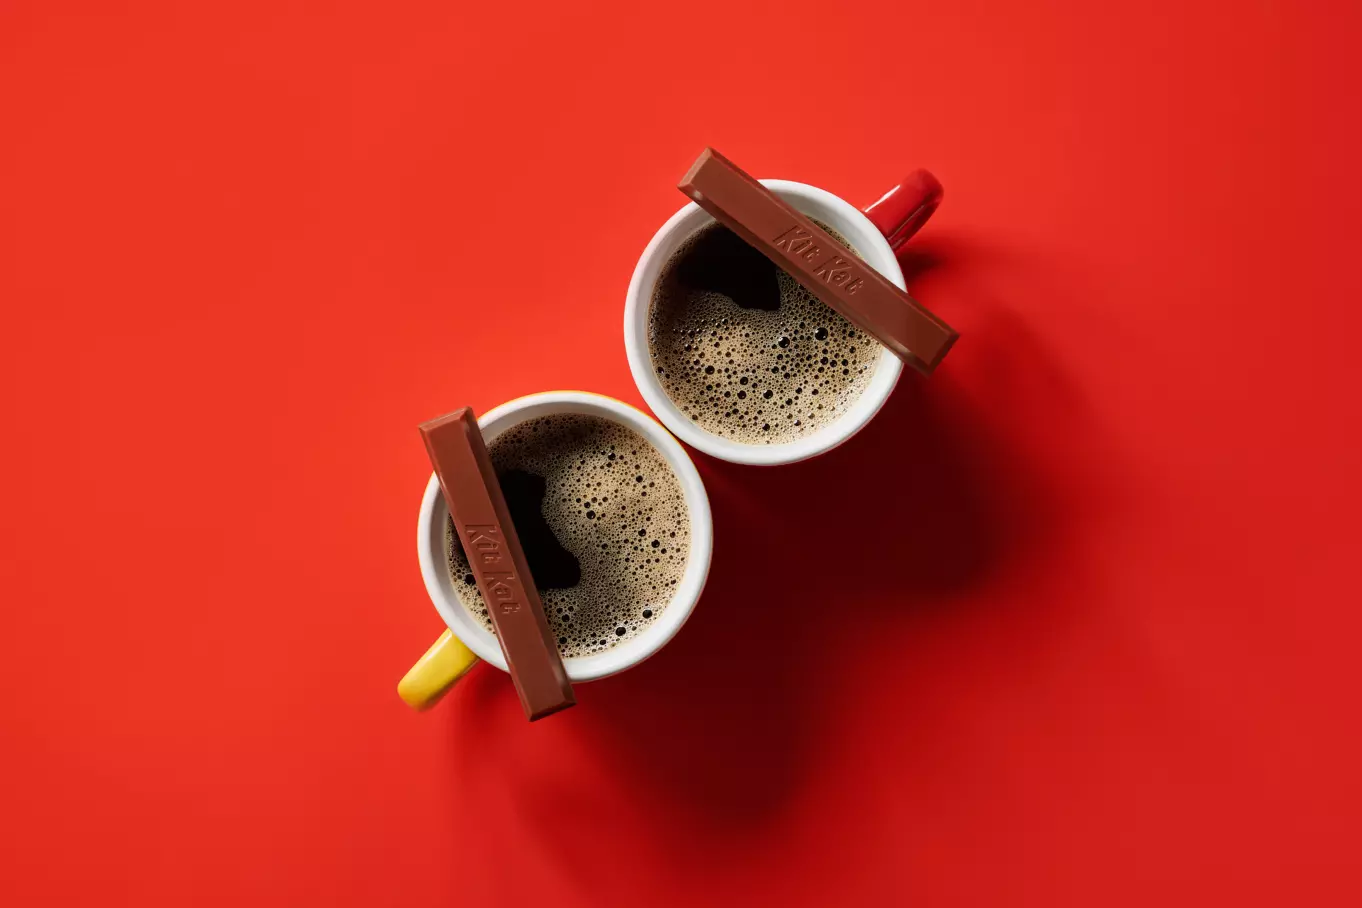 KIT KAT® Milk Chocolate Candy Bars beside mugs of coffee